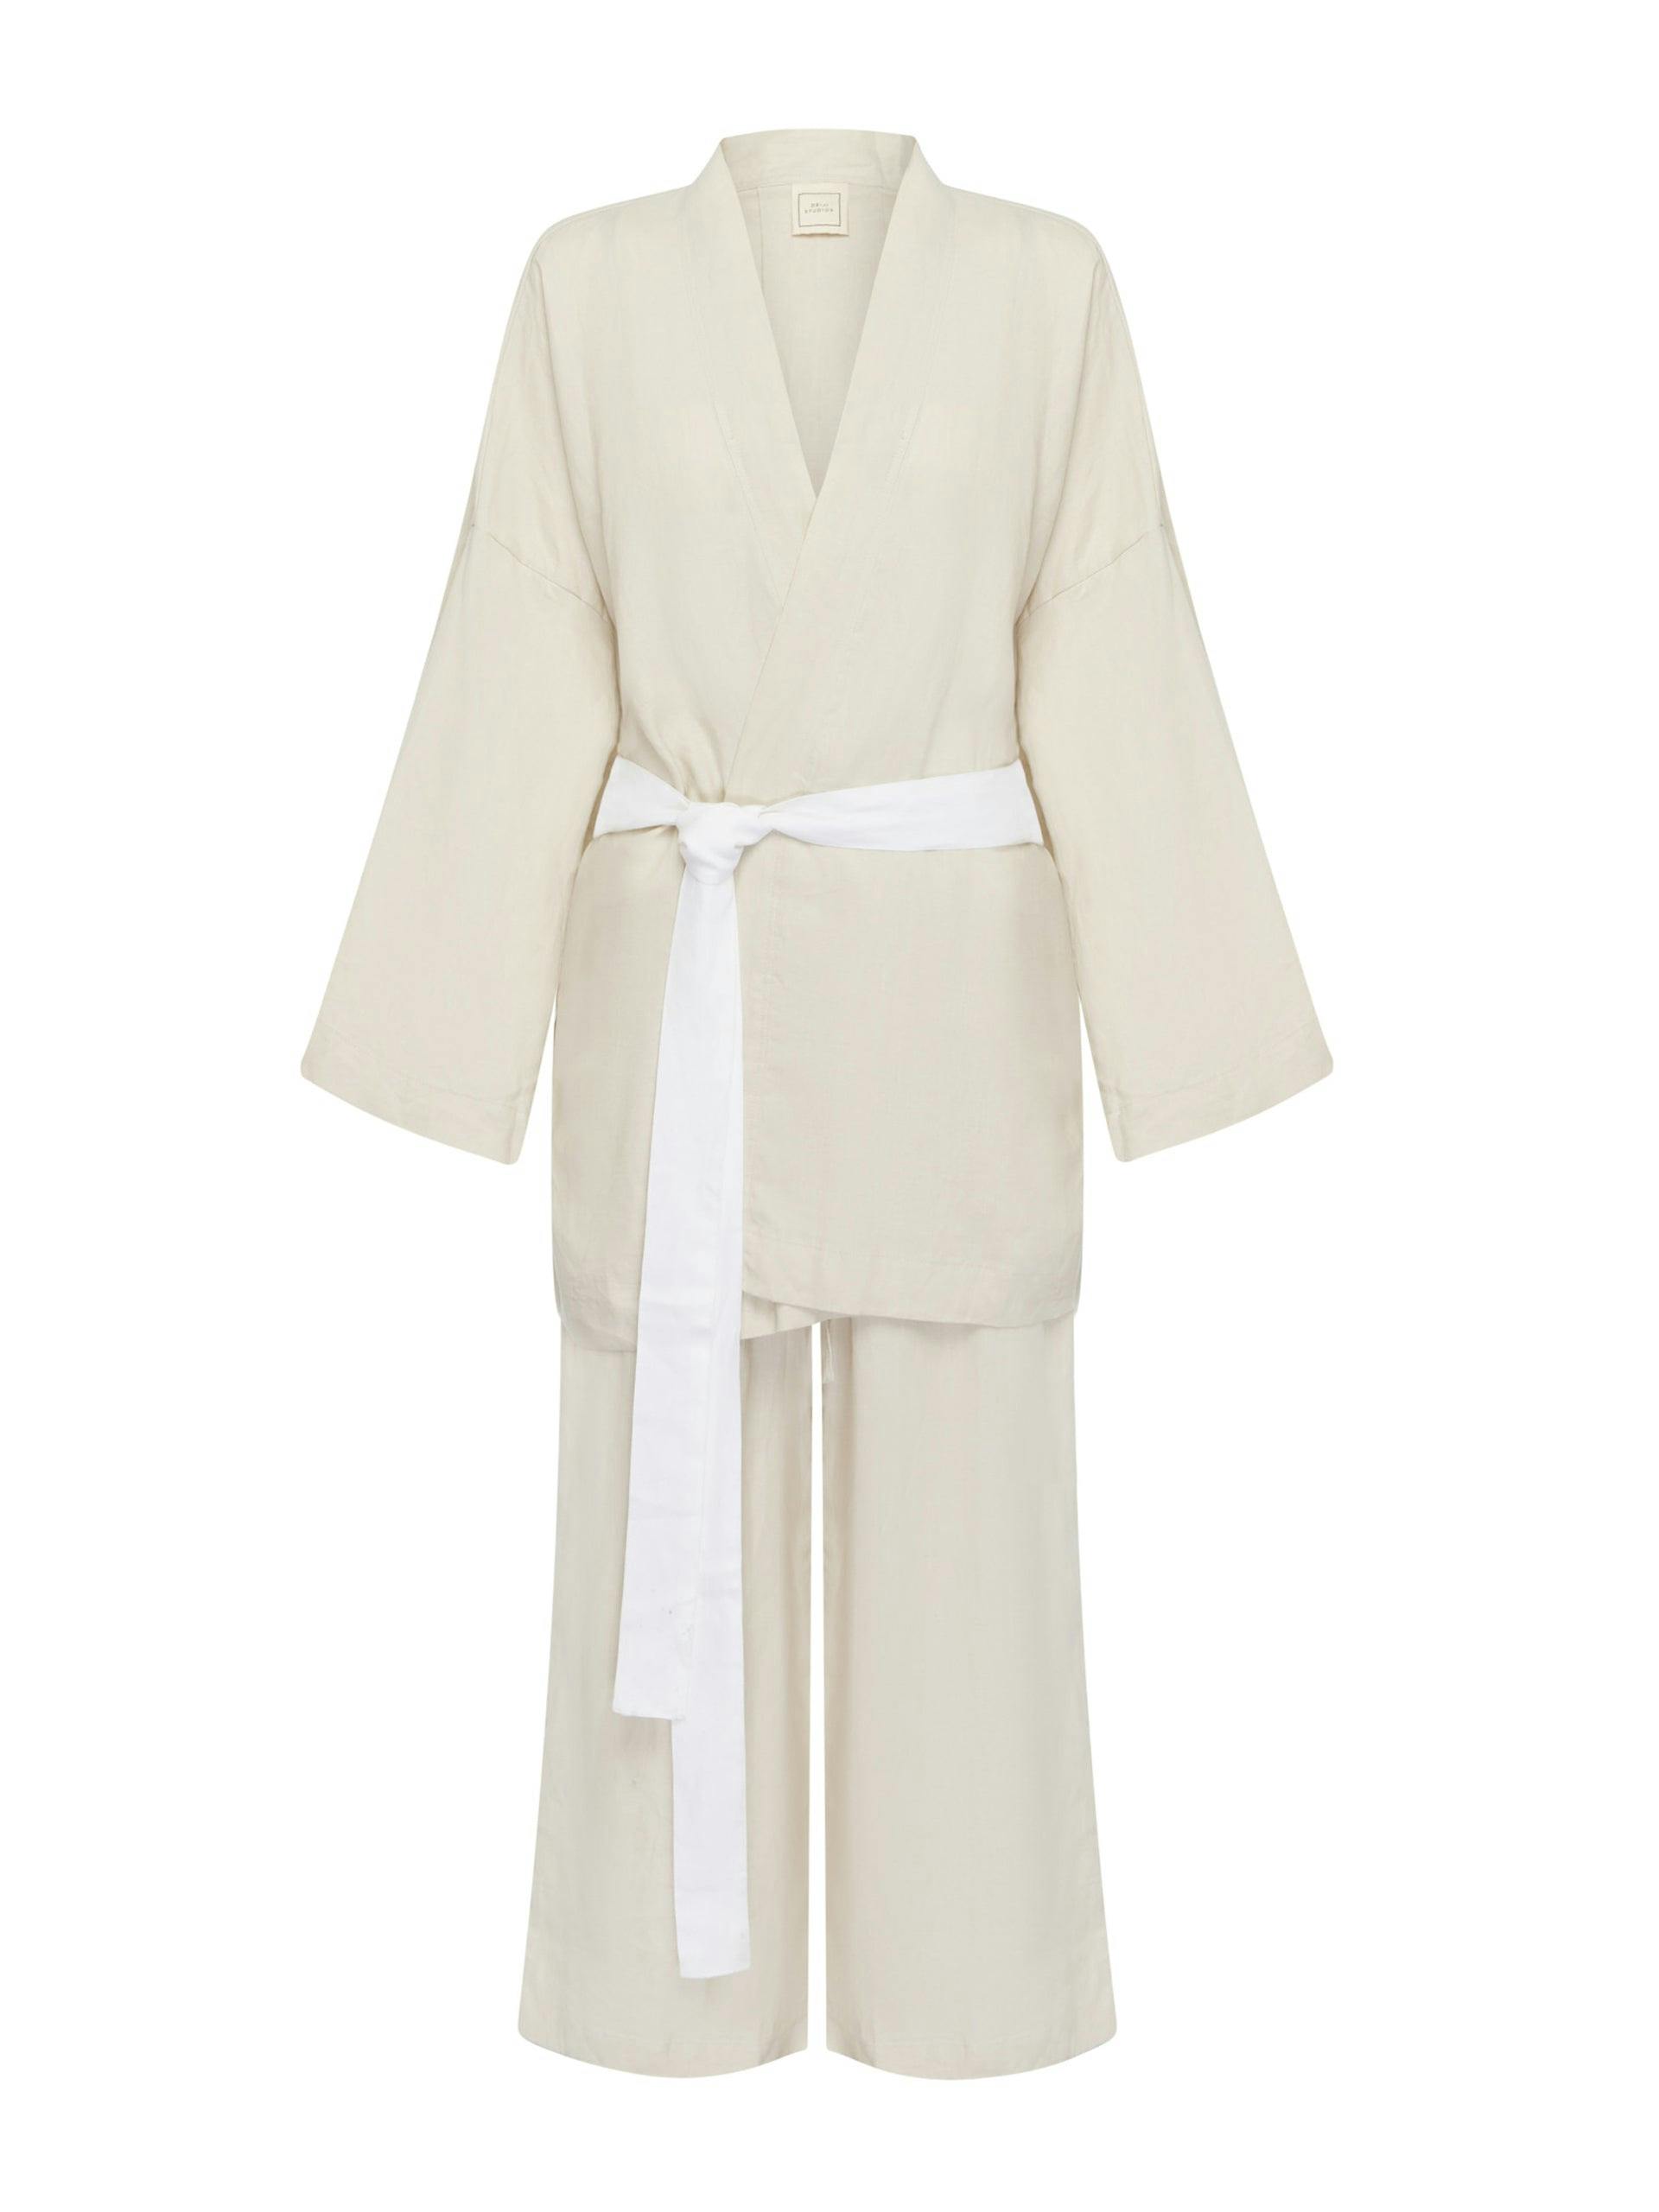 Cream linen robe set